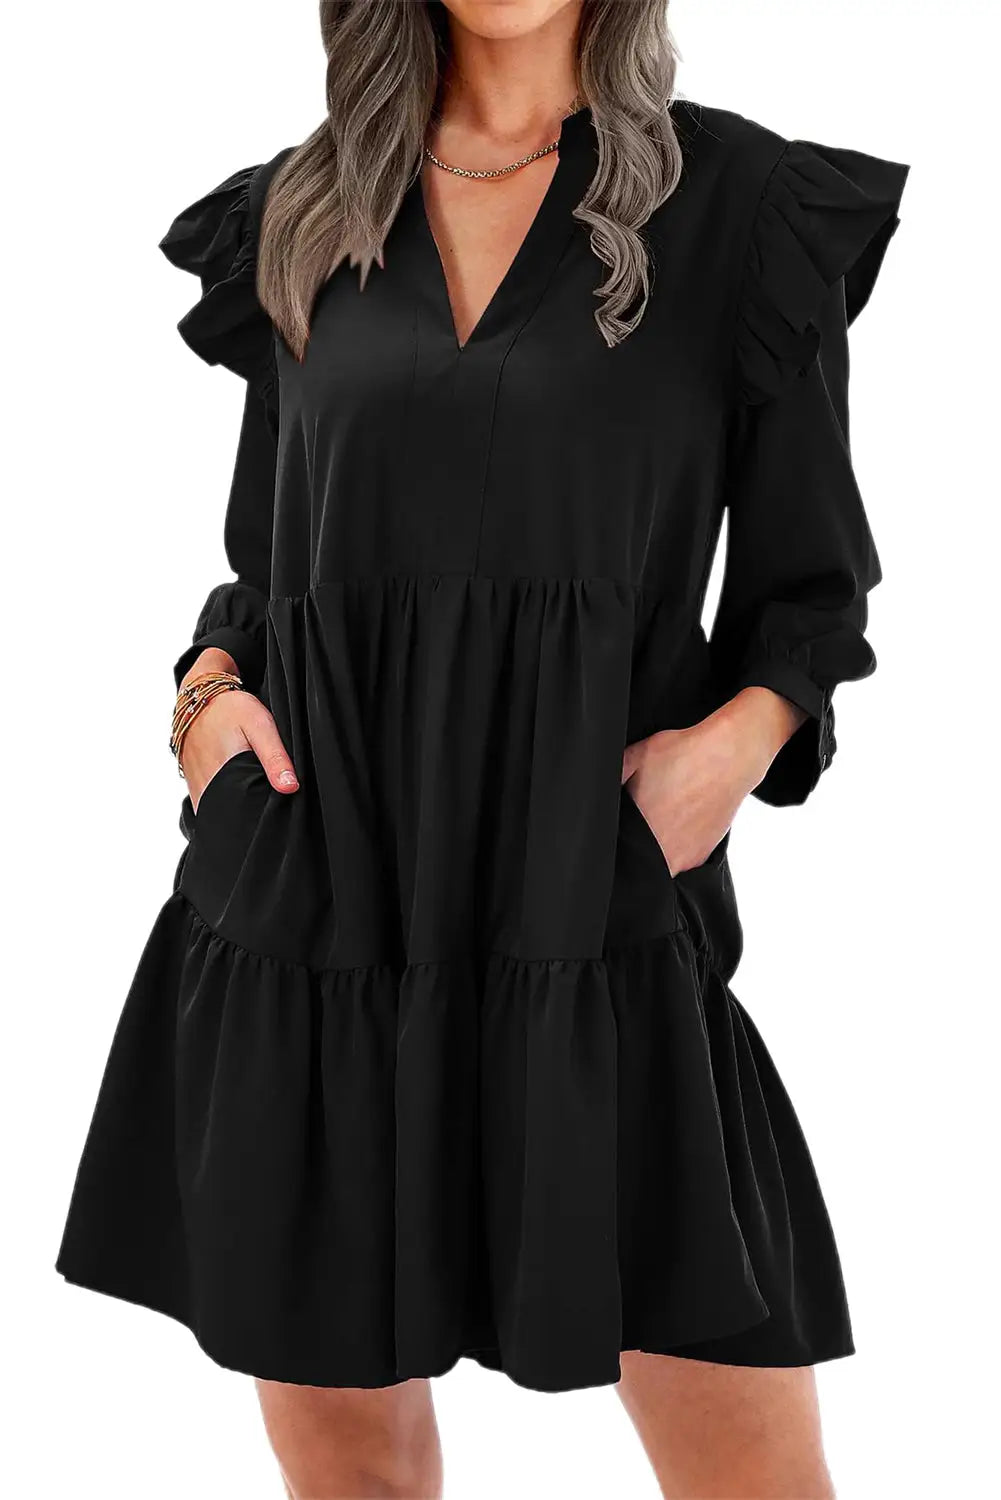 Black v neck tiered ruffled dress with pockets - mini dresses